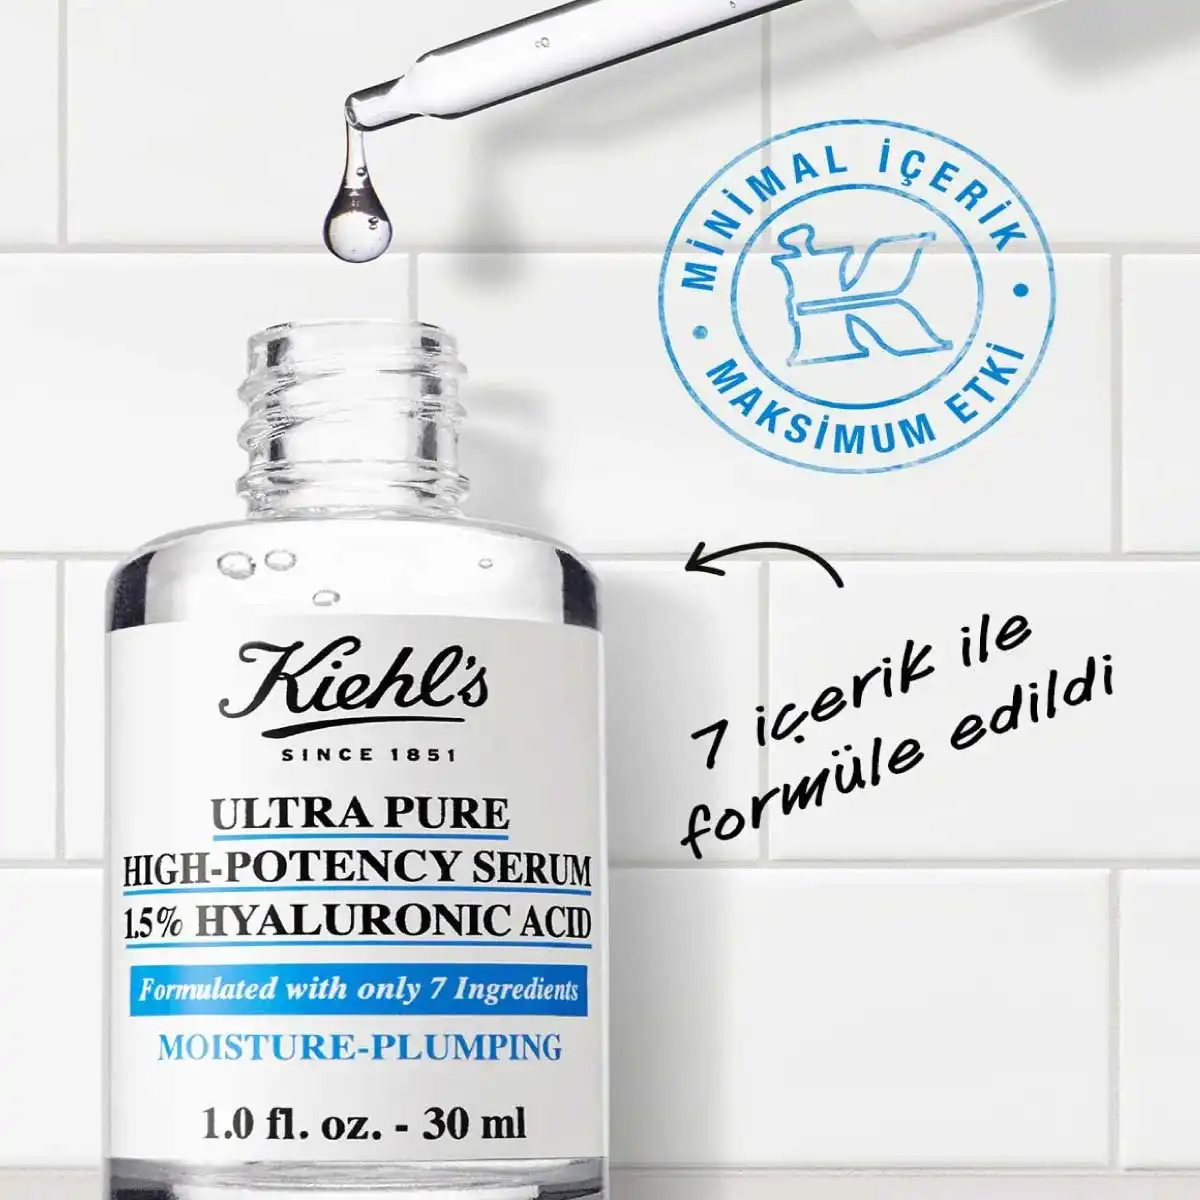 En İyi Hyalüronik Asit Serumu Tavsiyeleri Kiehl's Ultra Pure High-Potency Hyalüronik Asit Serumu